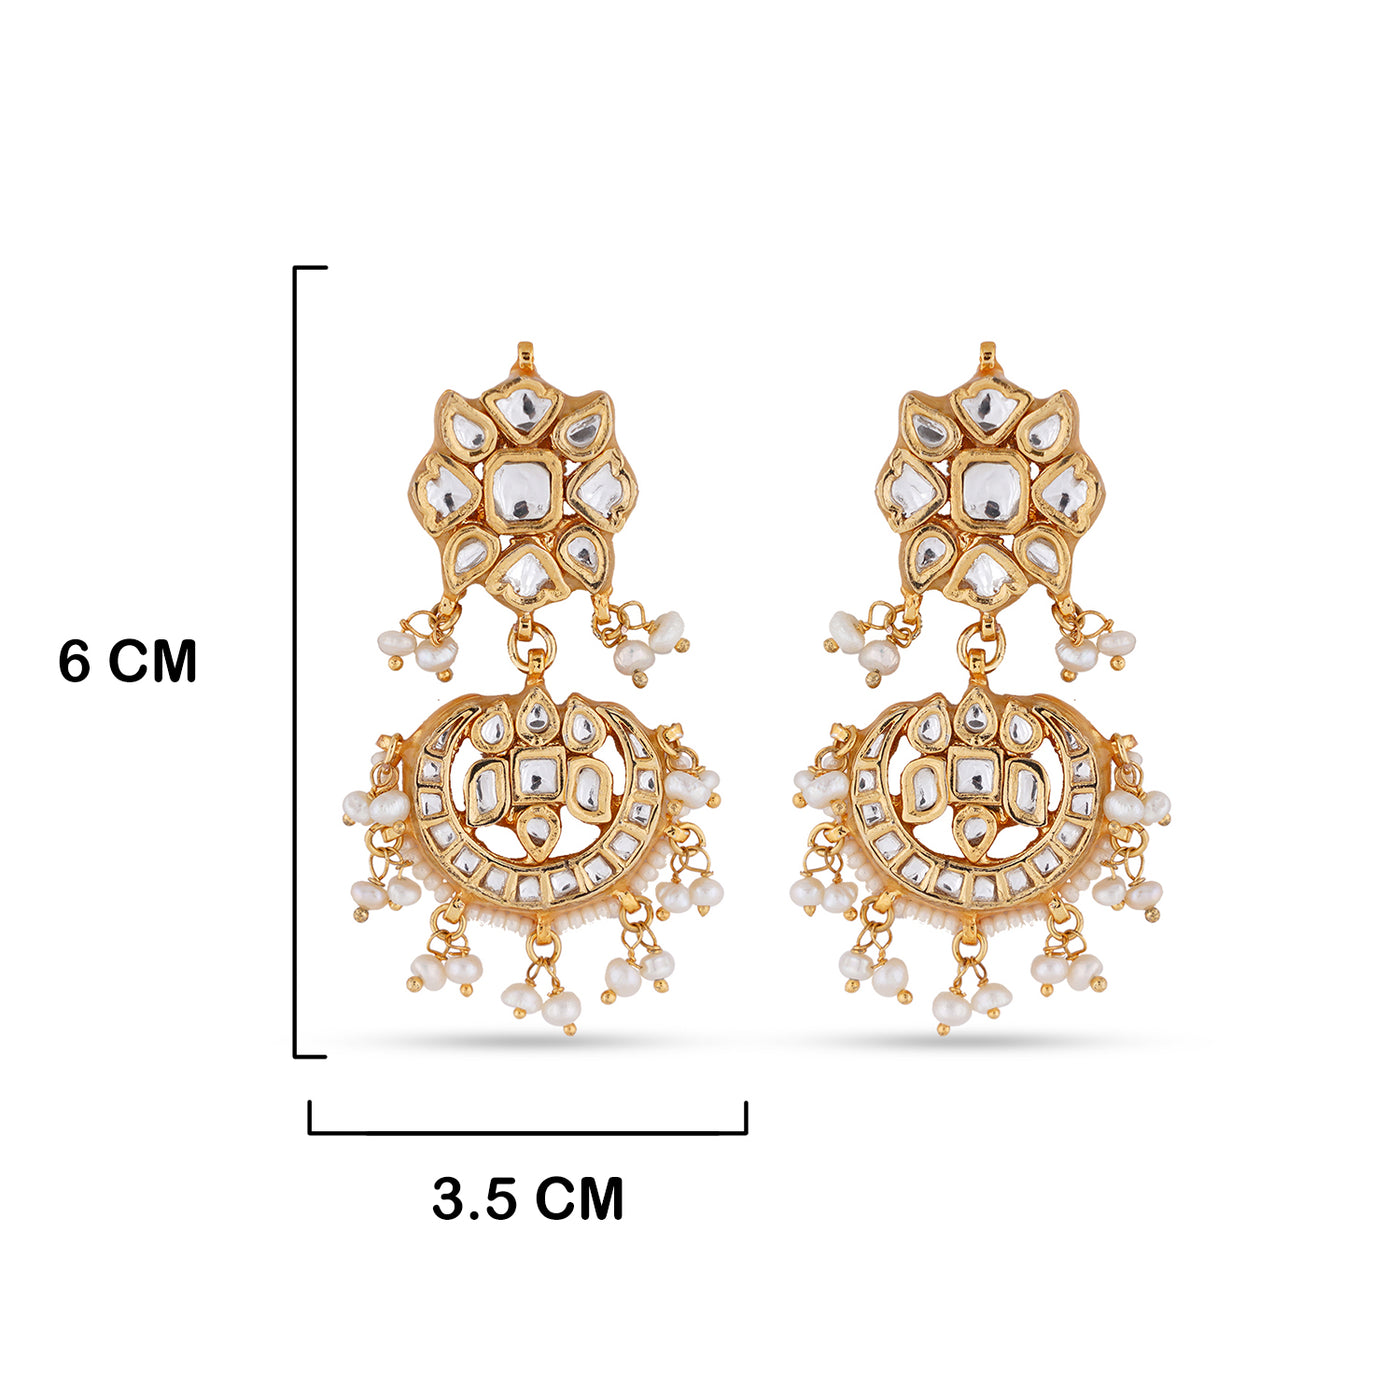  White Bead Kundan Earrings with measurements in cm. 6cm by 3.5cm.